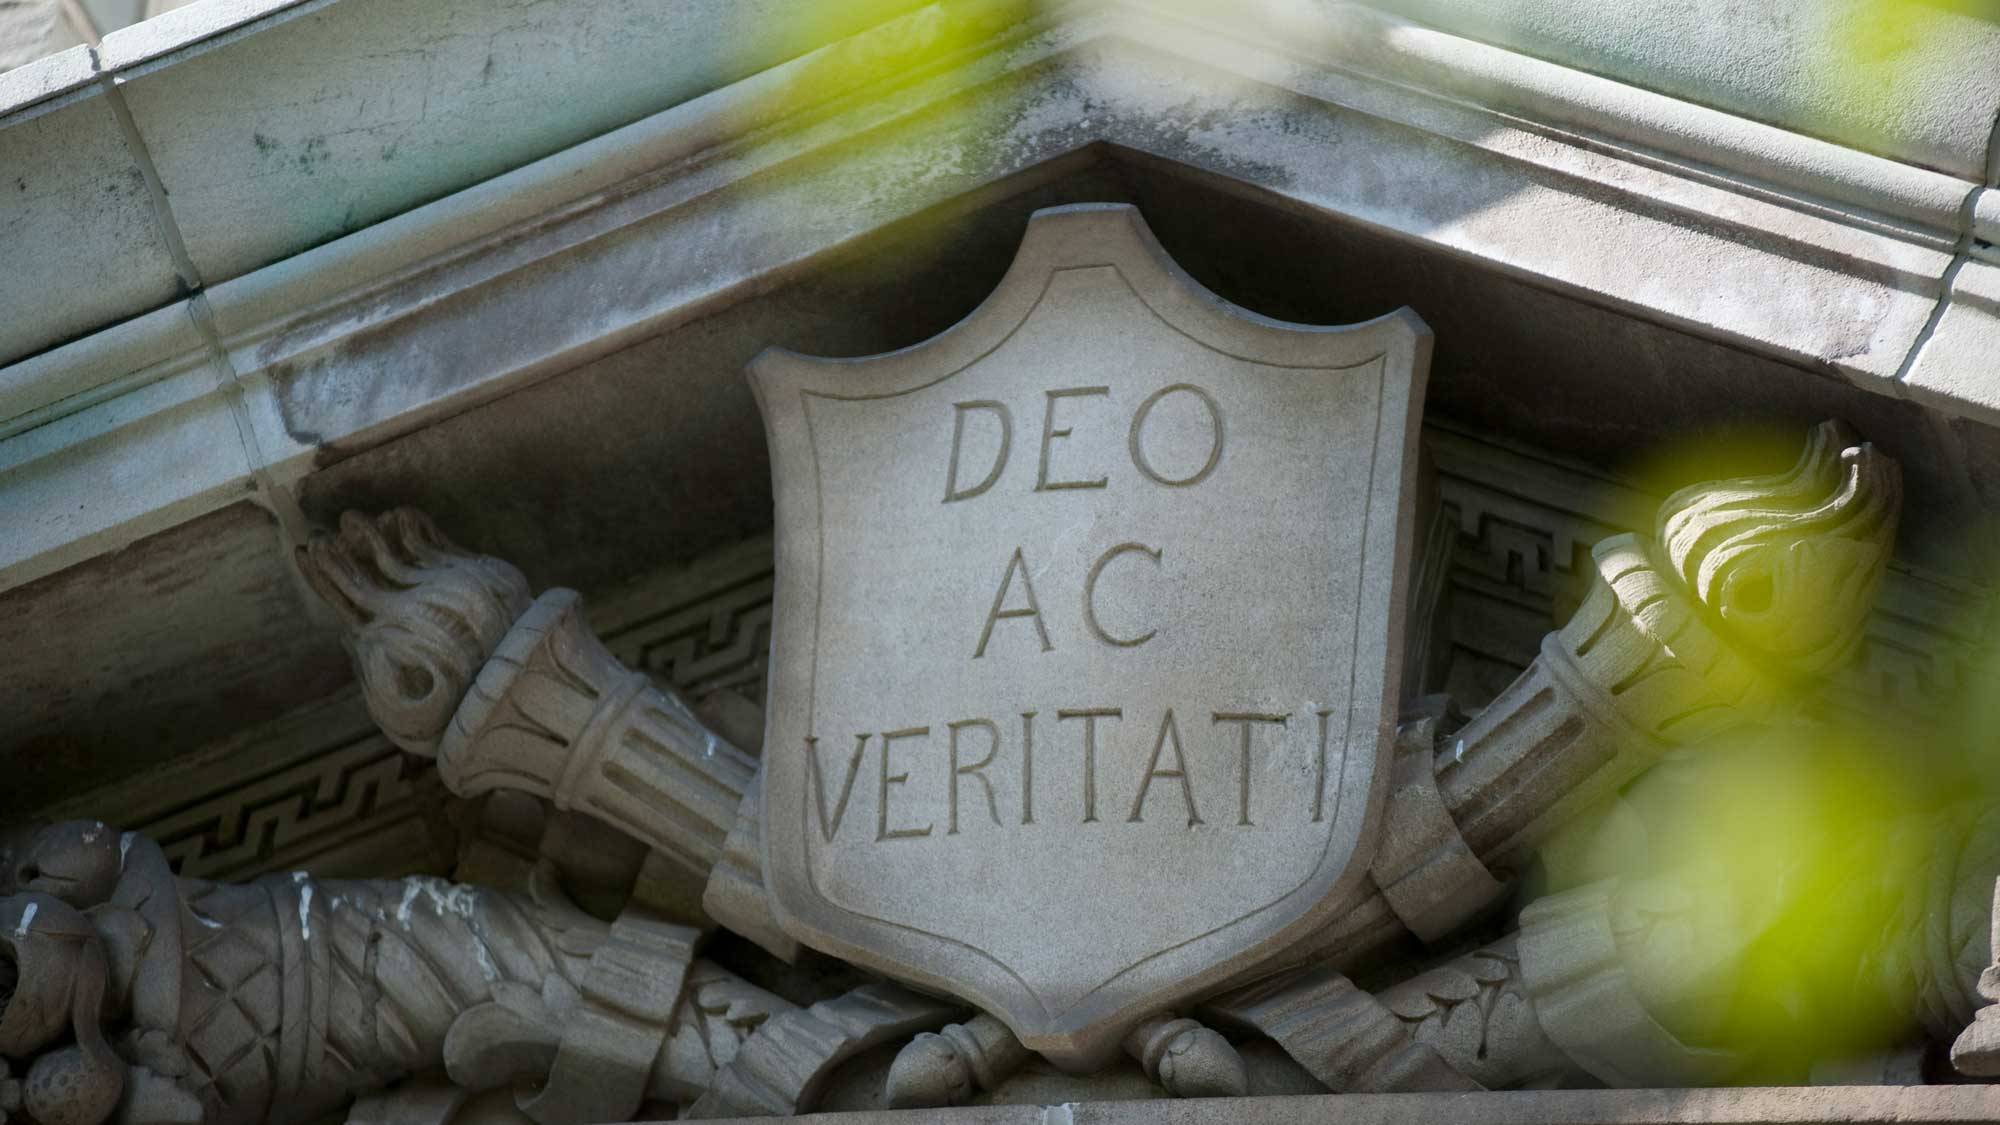 Deo Ac Veritati carved on stone shield